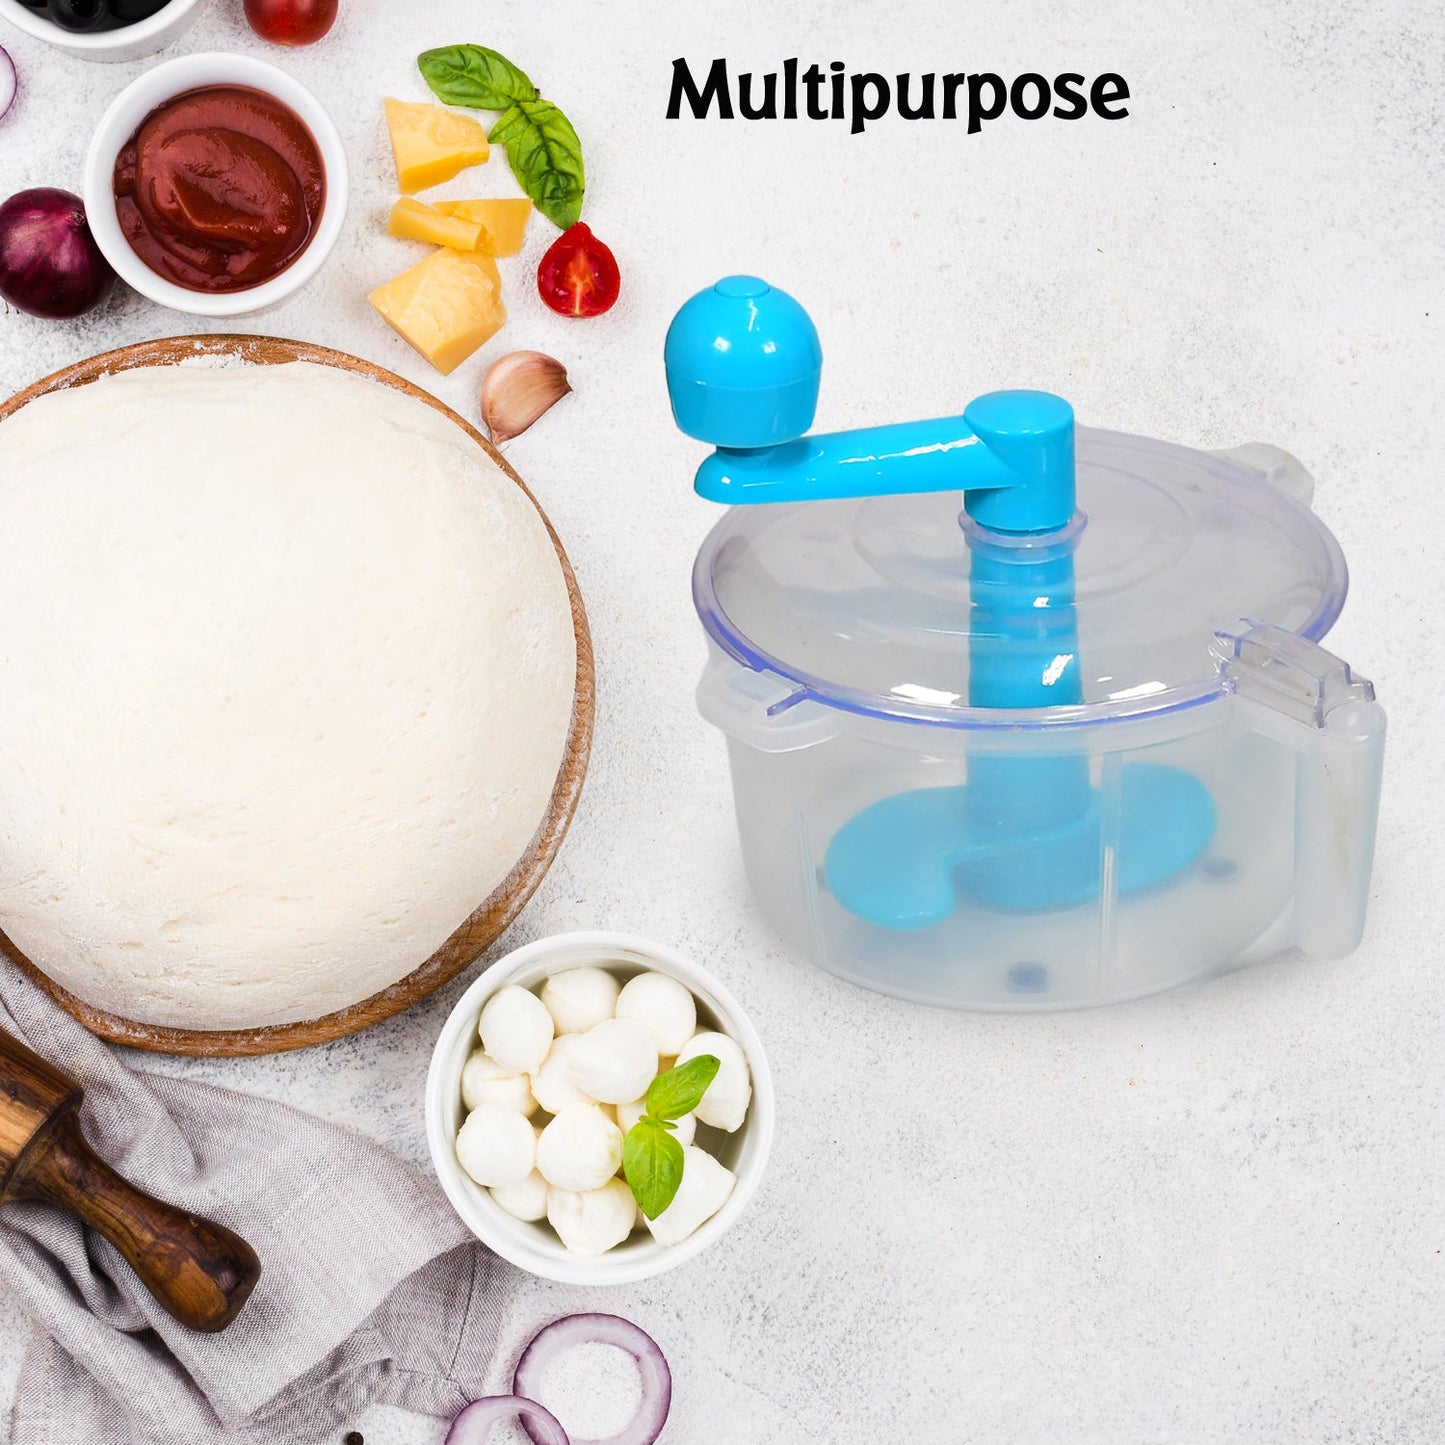 2116 Multipurpose Transparent Dough Maker Machine (Atta Maker) , Measuring Cup And Slicer (Brown Box) DeoDap